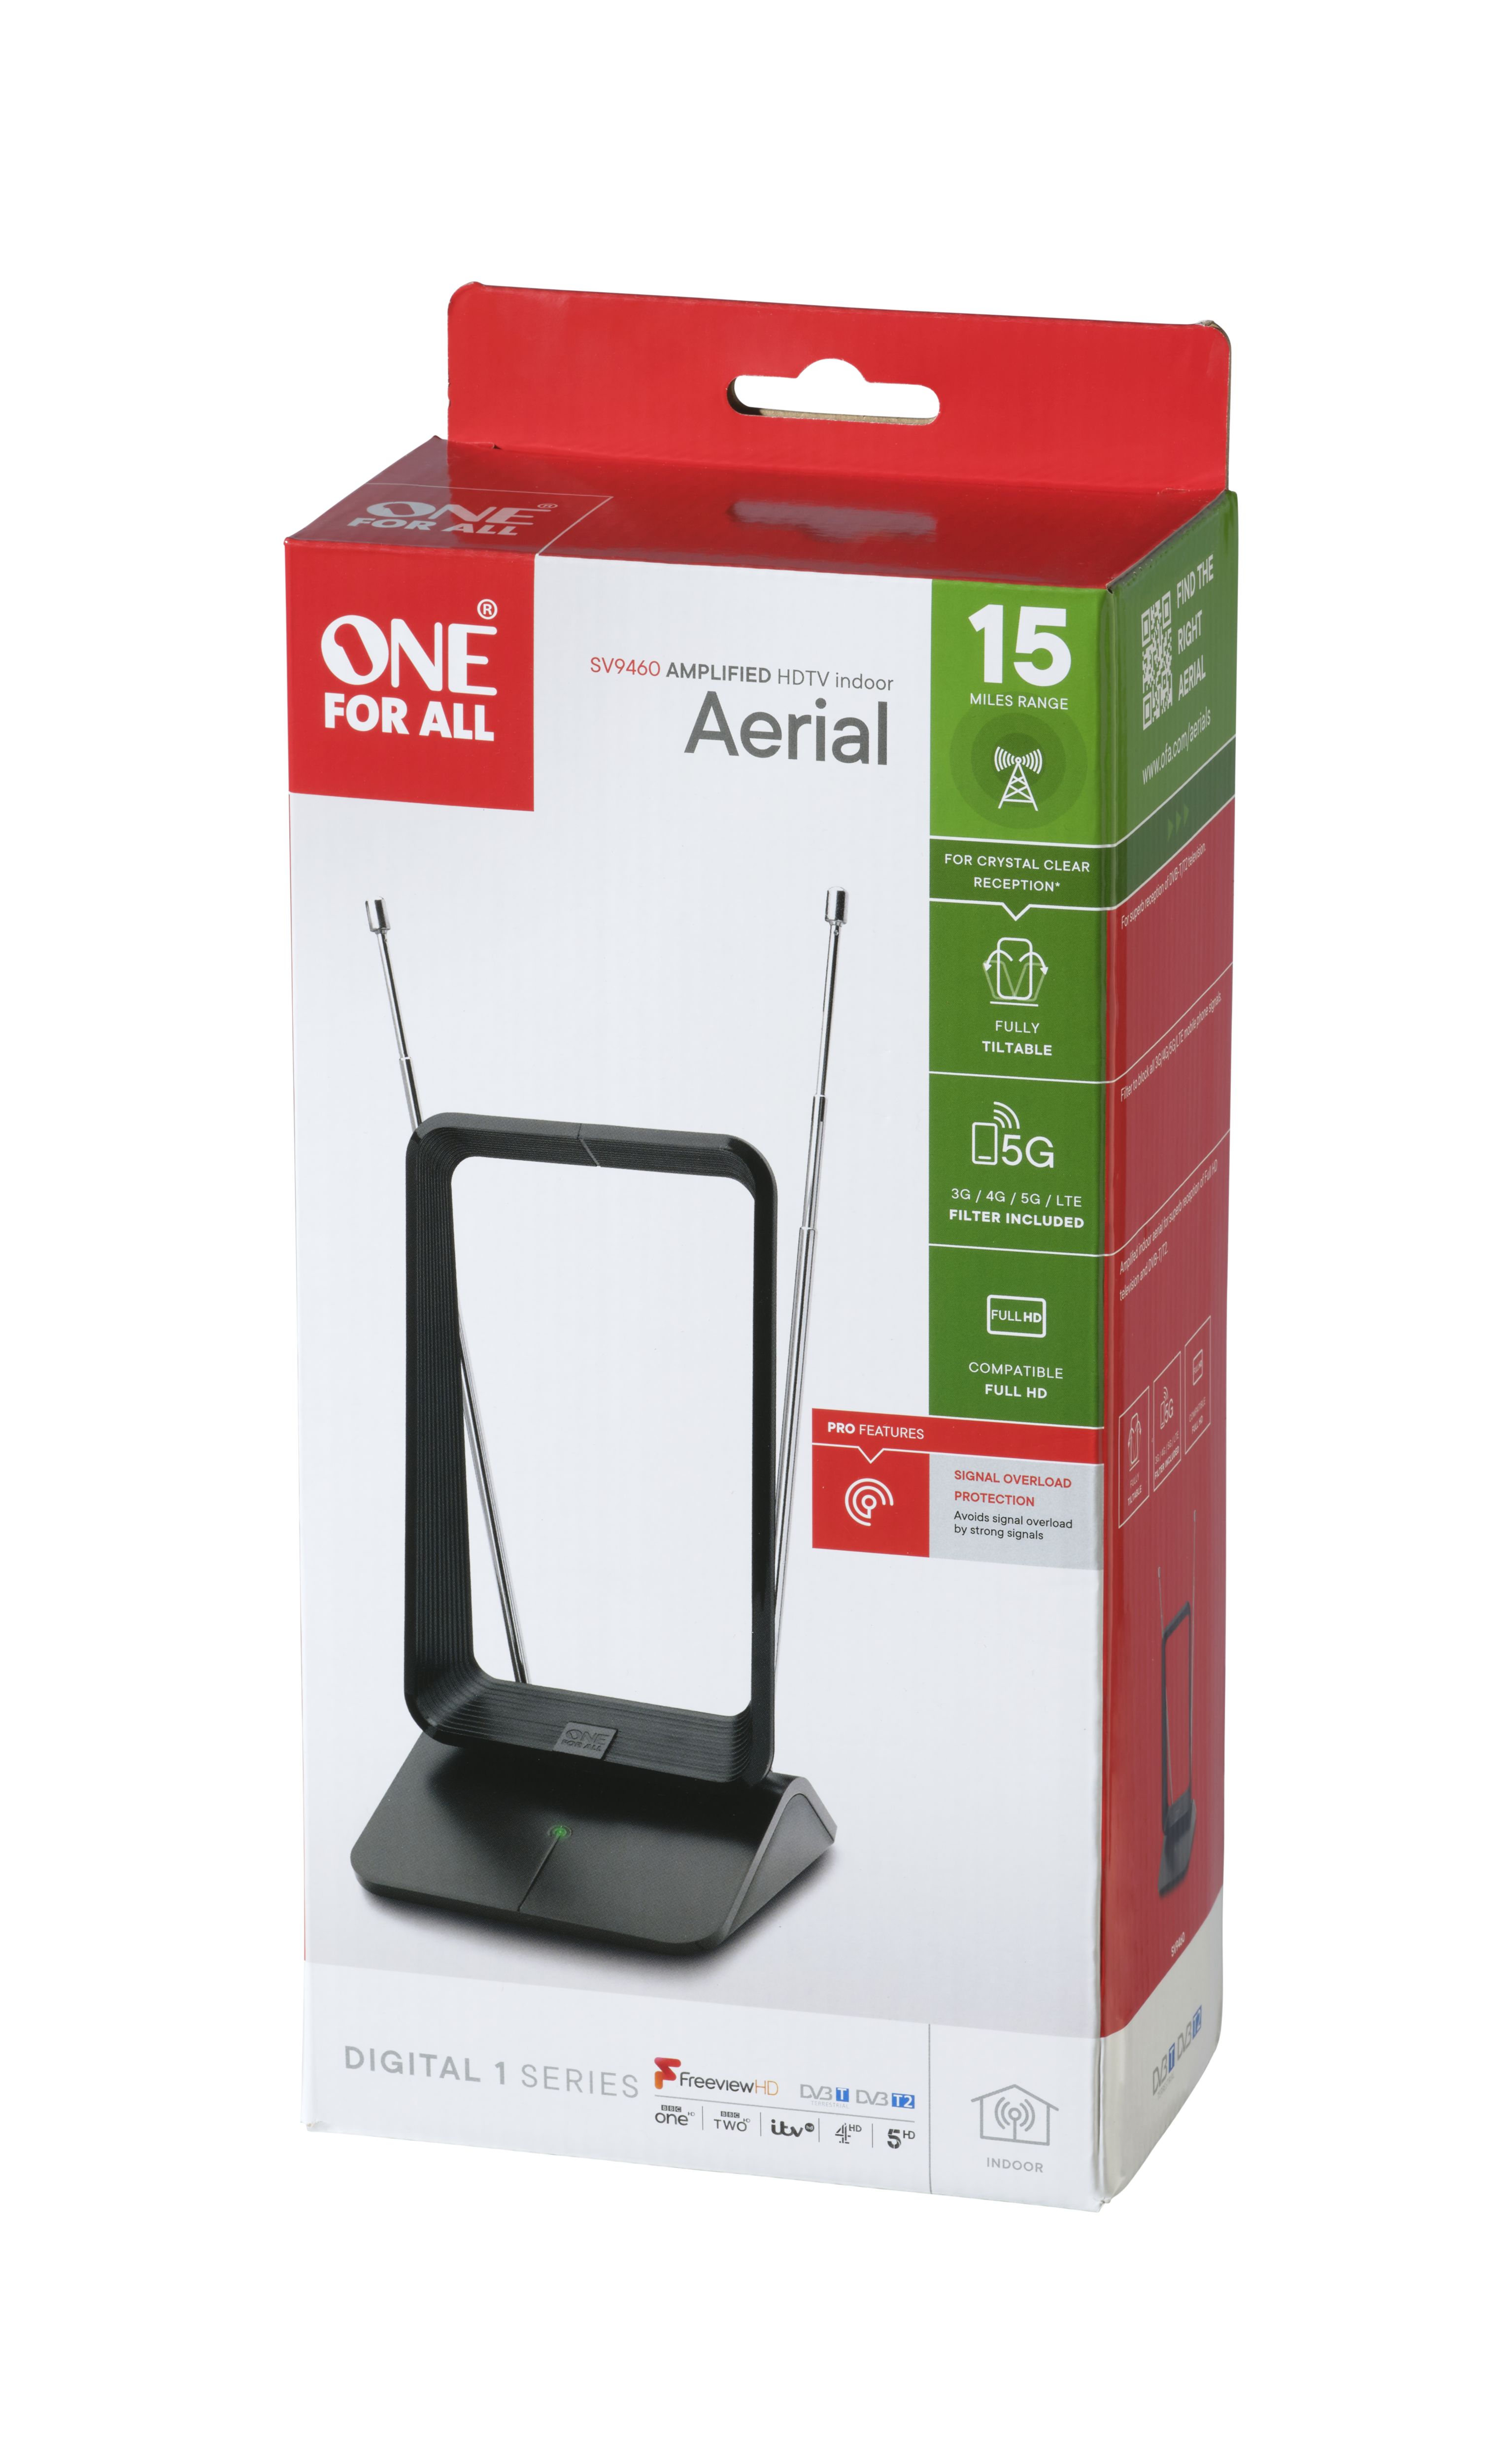 One For All Indoor Omni-directional Digital TV aerial SV9460